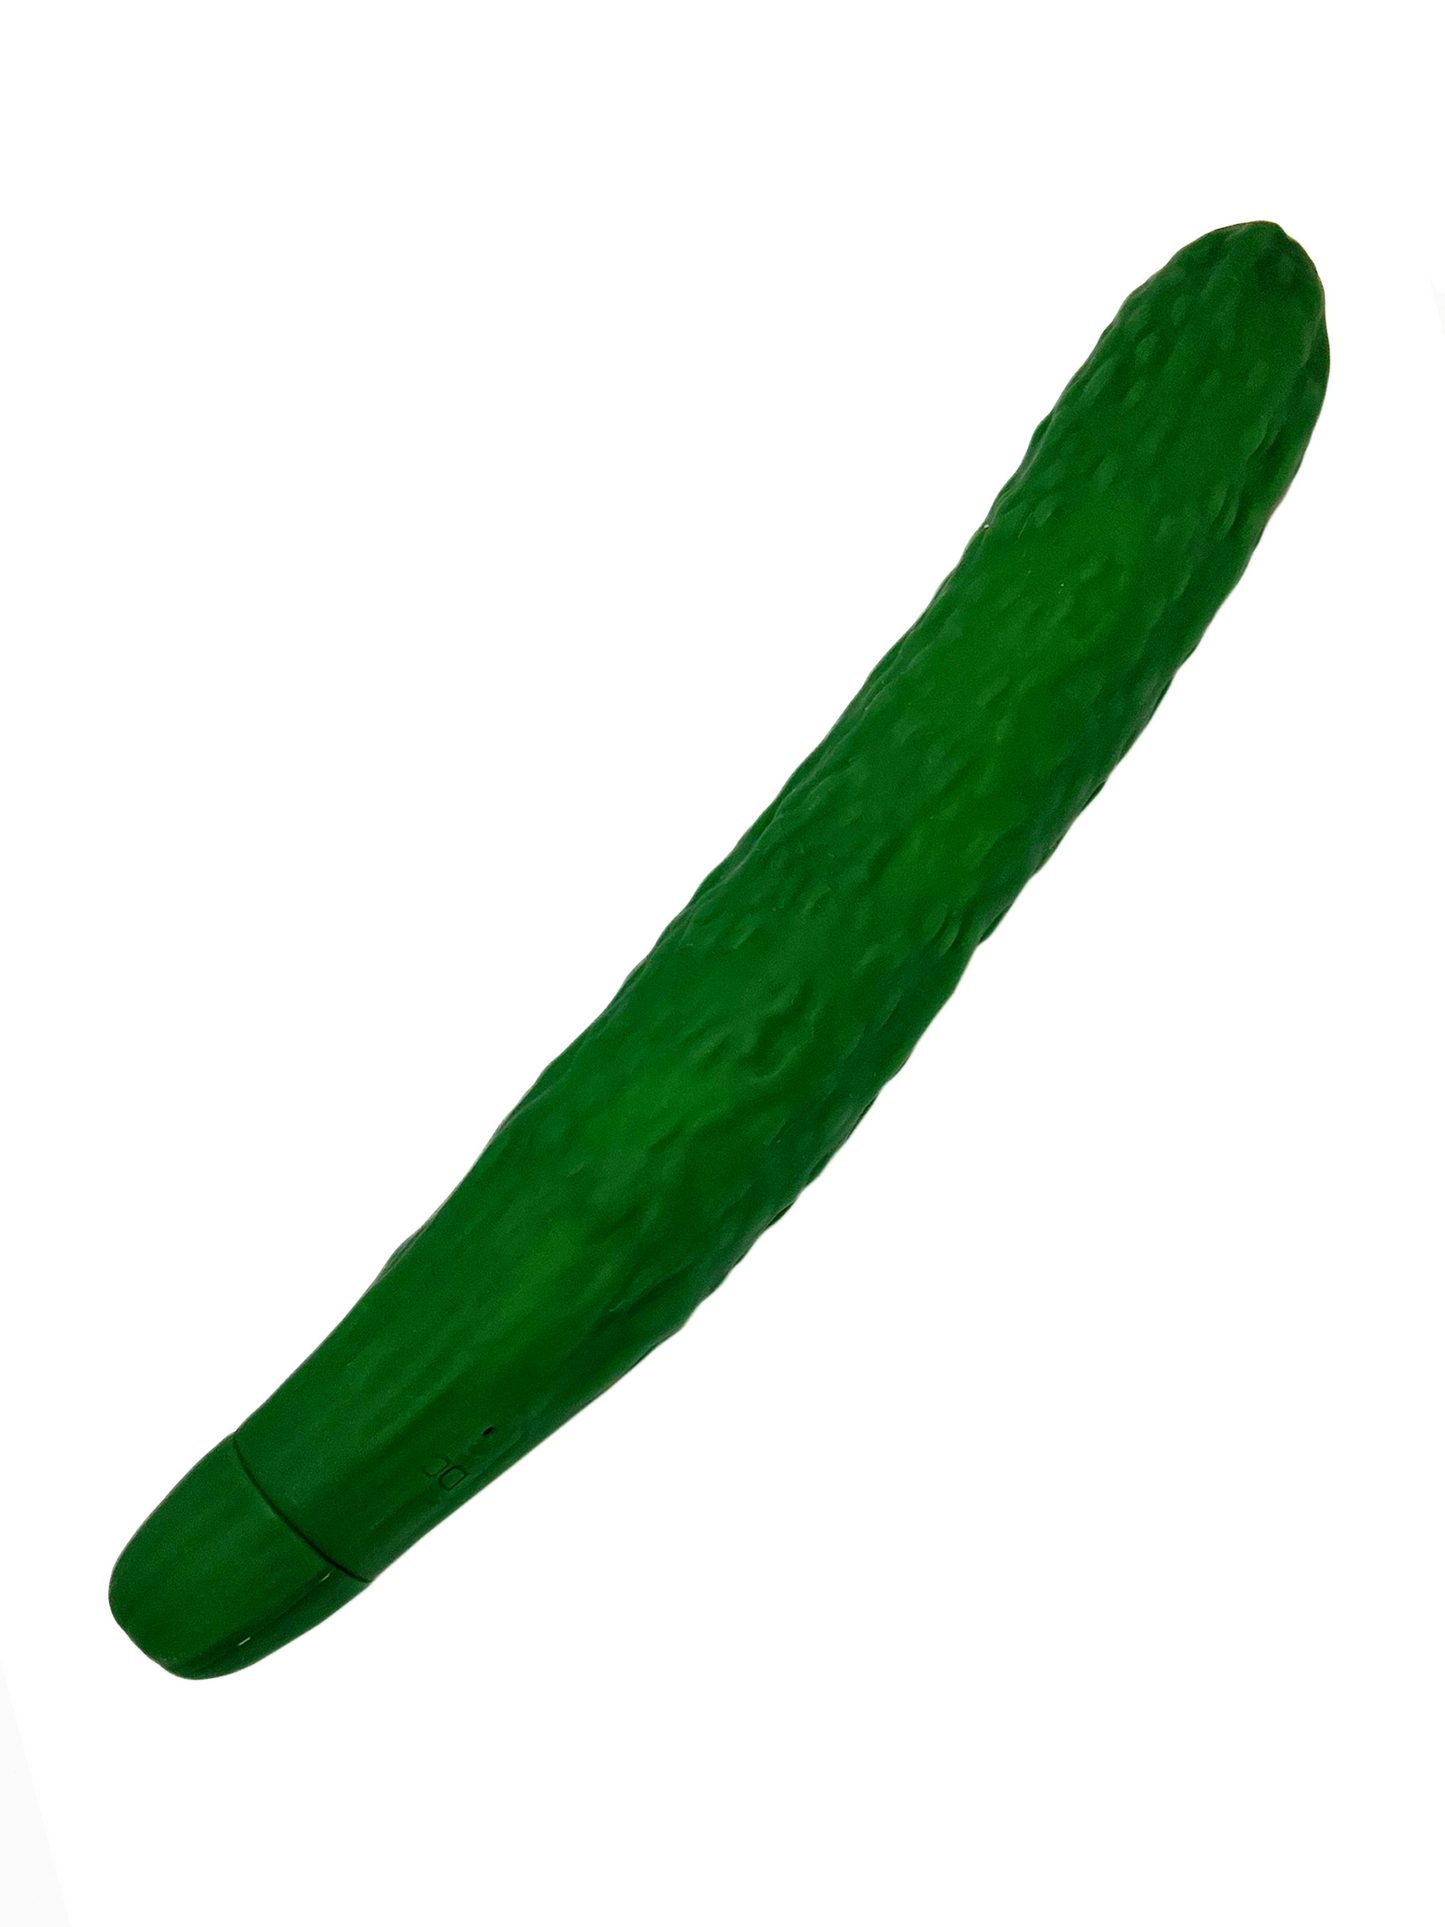 Vegetable Vibes Cucumber Vibrator